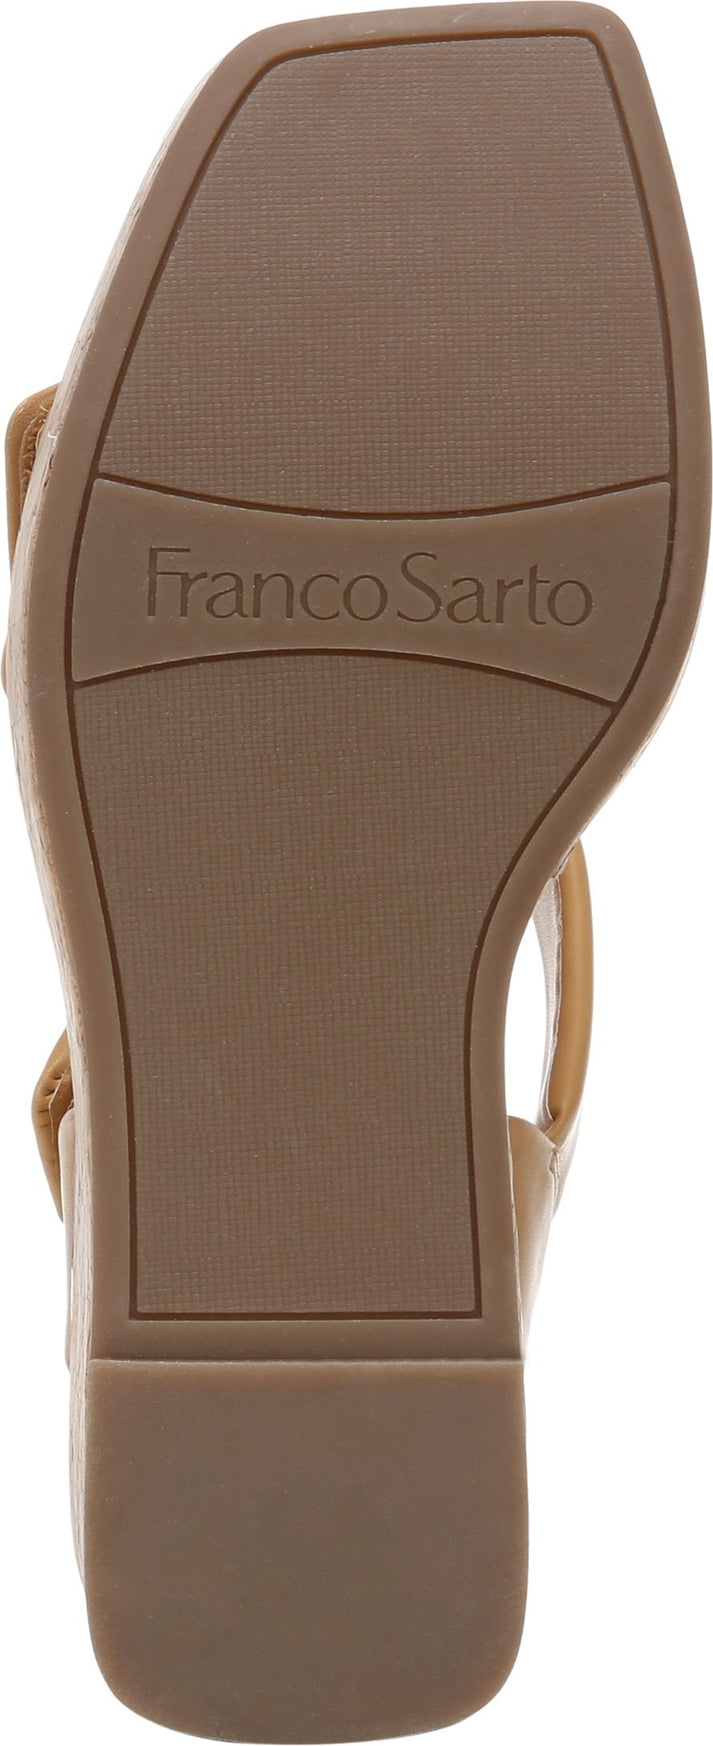 Franco Sarto Sandals Sweety Camel